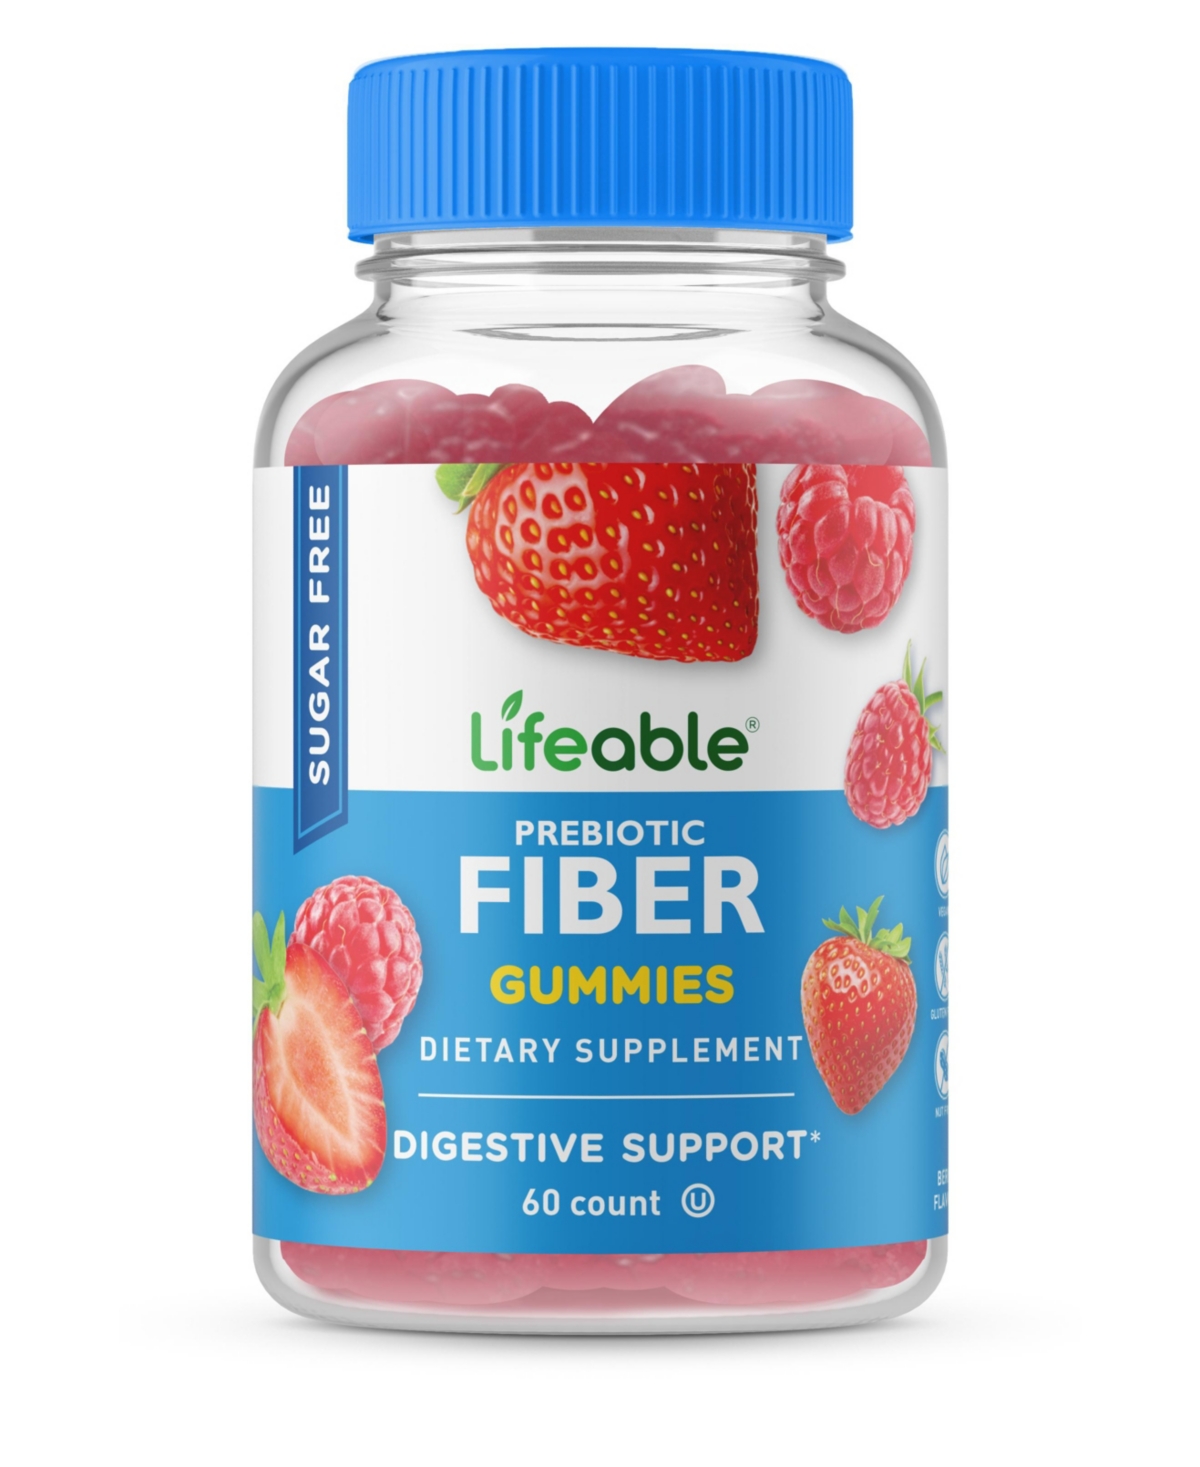 Sugar Free Prebiotics Fiber 4g Gummies - Digestive System - Great Tasting Natural Flavor, Dietary Supplement Vitamins - 60 Gummies - Open Mis